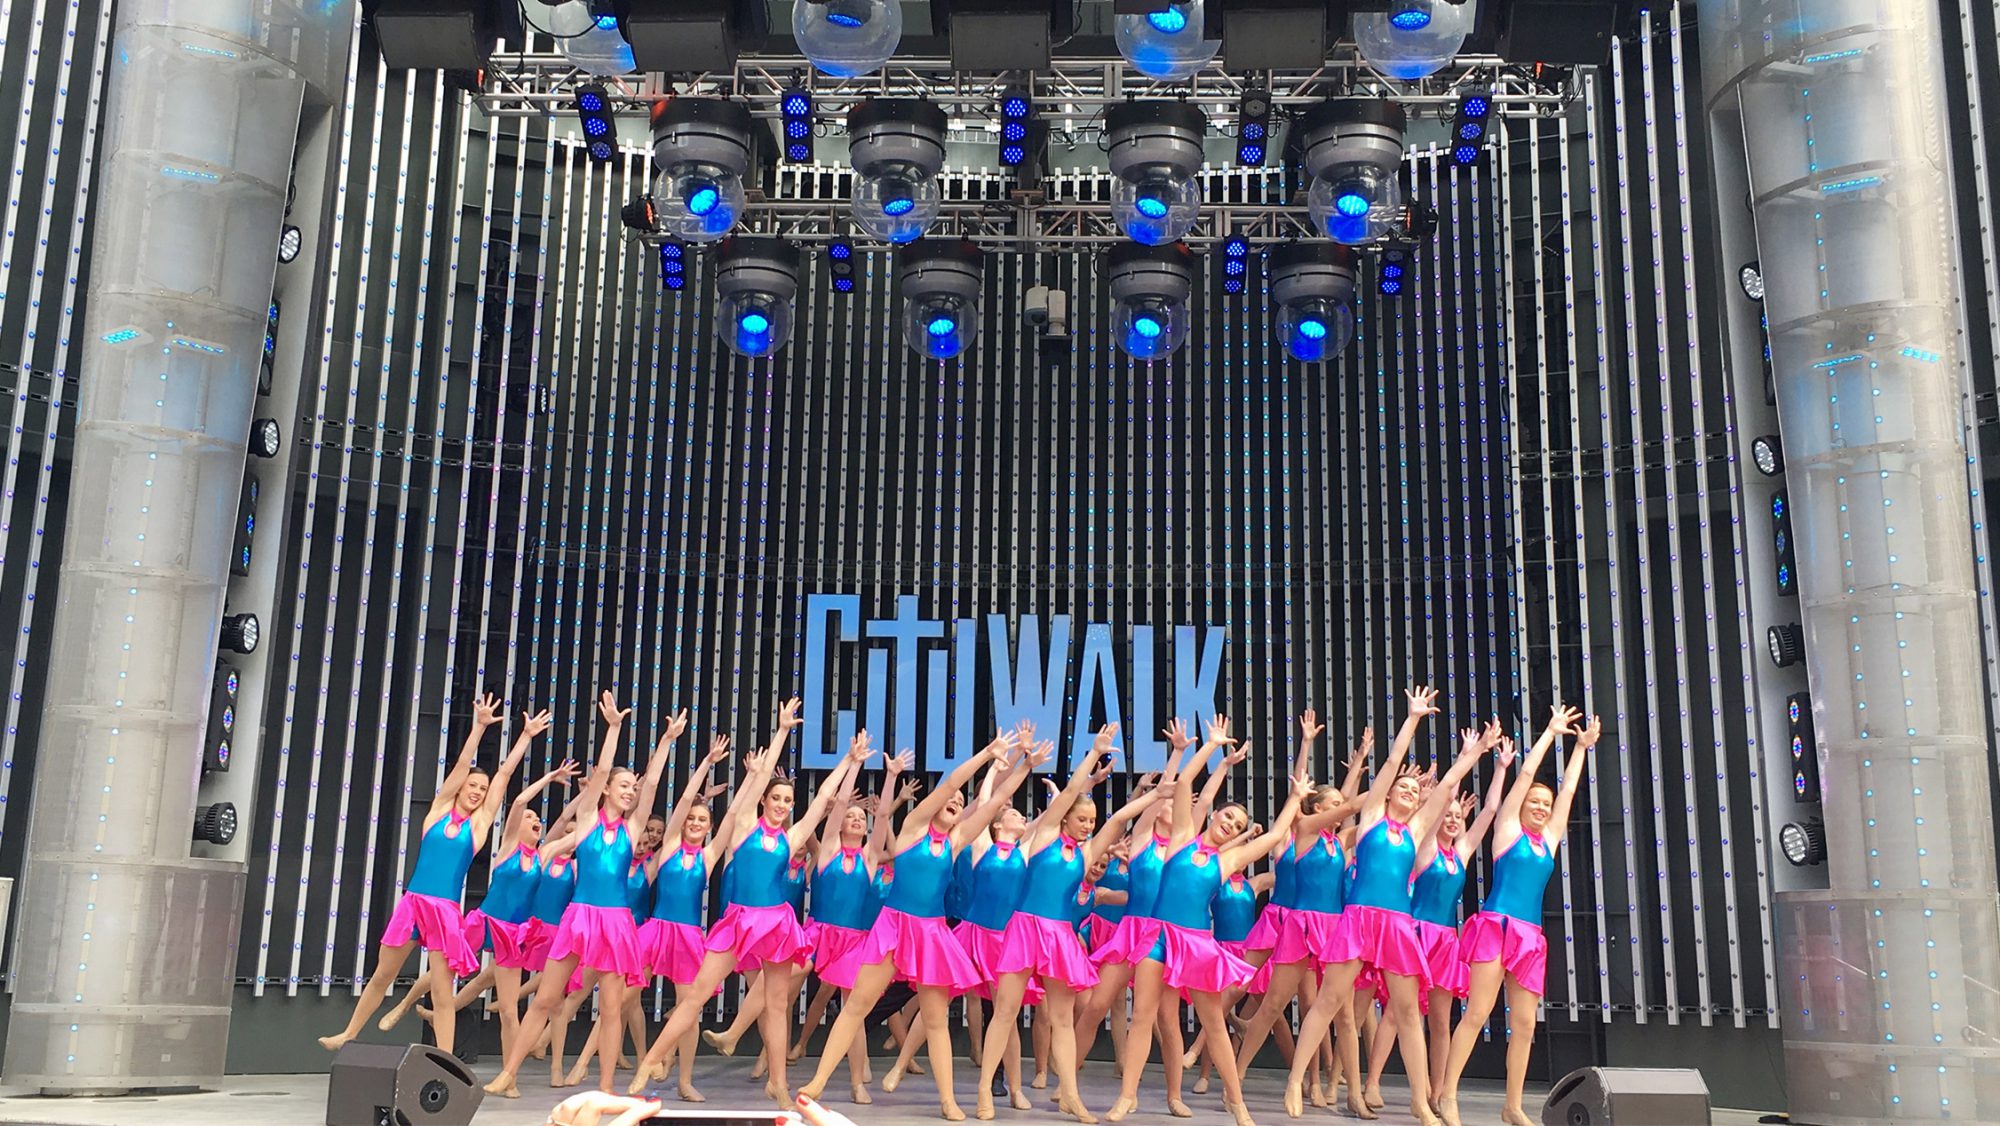 Dance Team Performing at Universal CityWalk